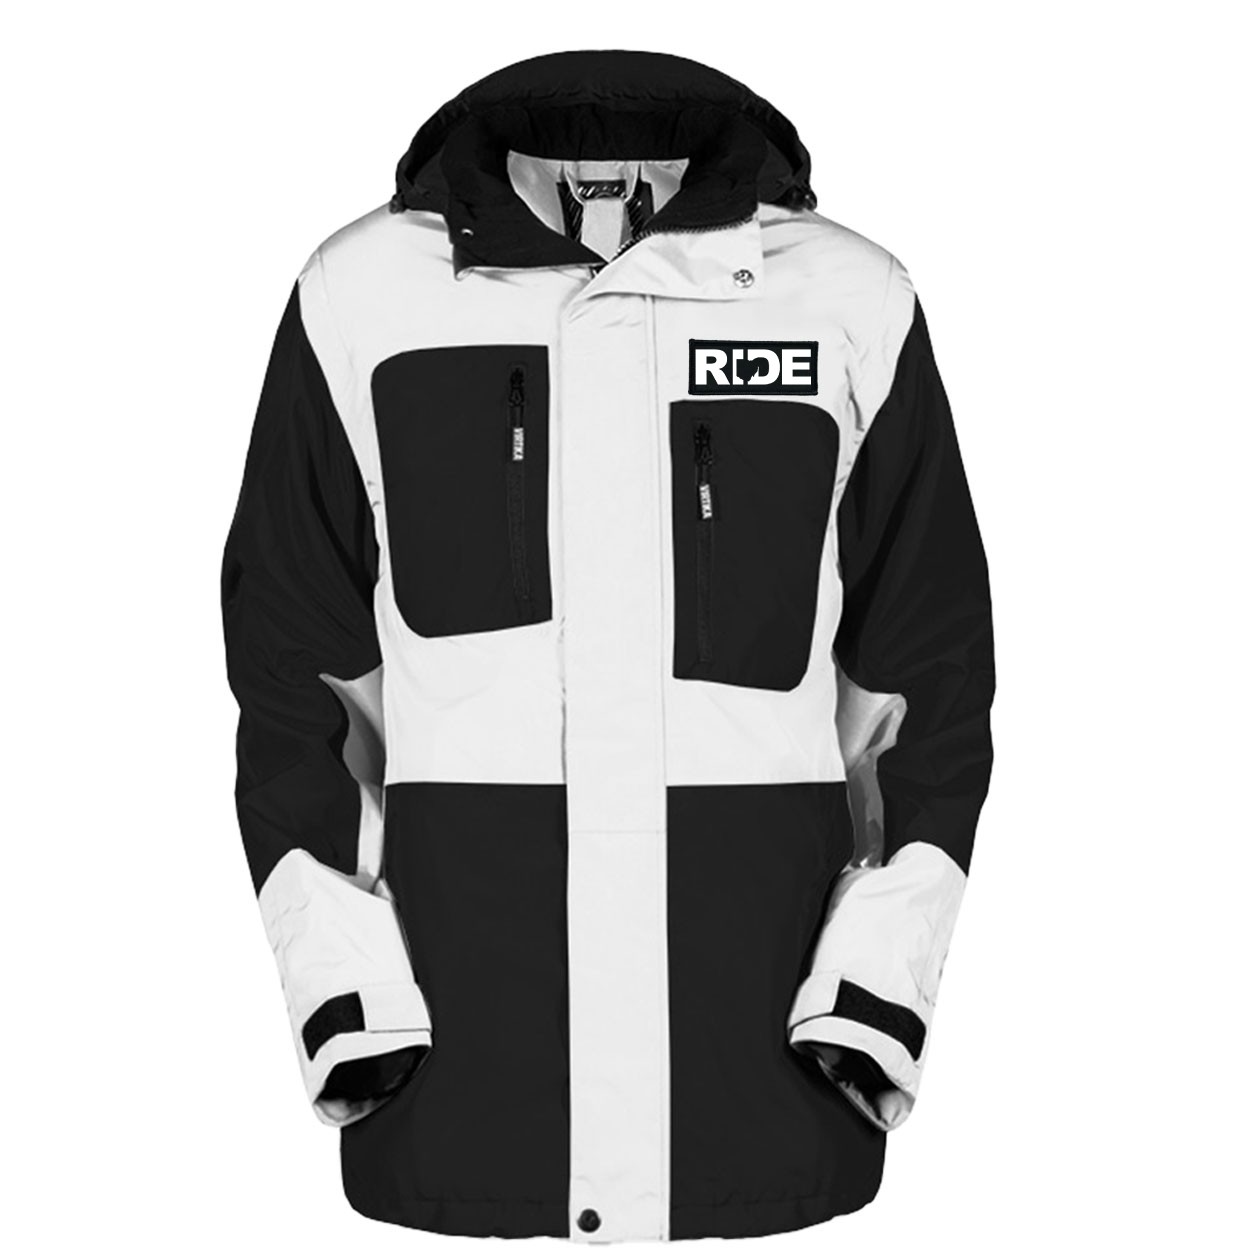 Ride Ohio Classic Woven Patch Pro Snowboard Jacket (Black/White)